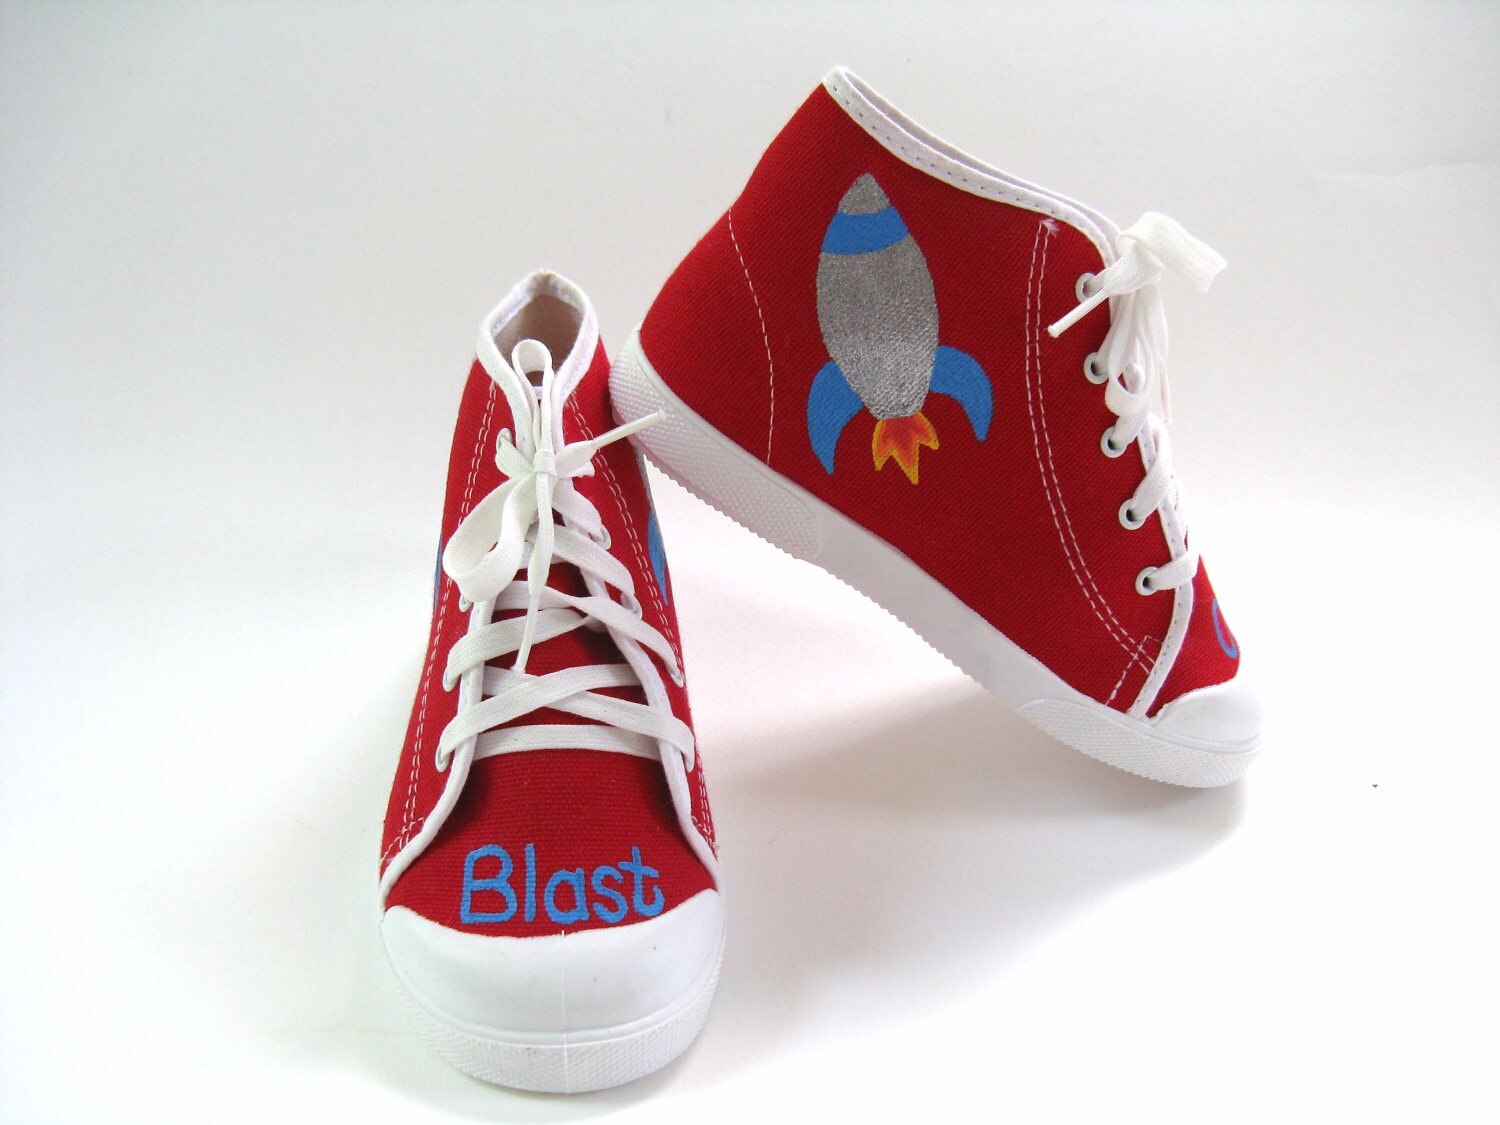 Space Ship Shoes Hand Painted Rocket Ship on Red Sneakers for Toddlers Schoenen Jongensschoenen Sneakers & Sportschoenen Reduced Price 